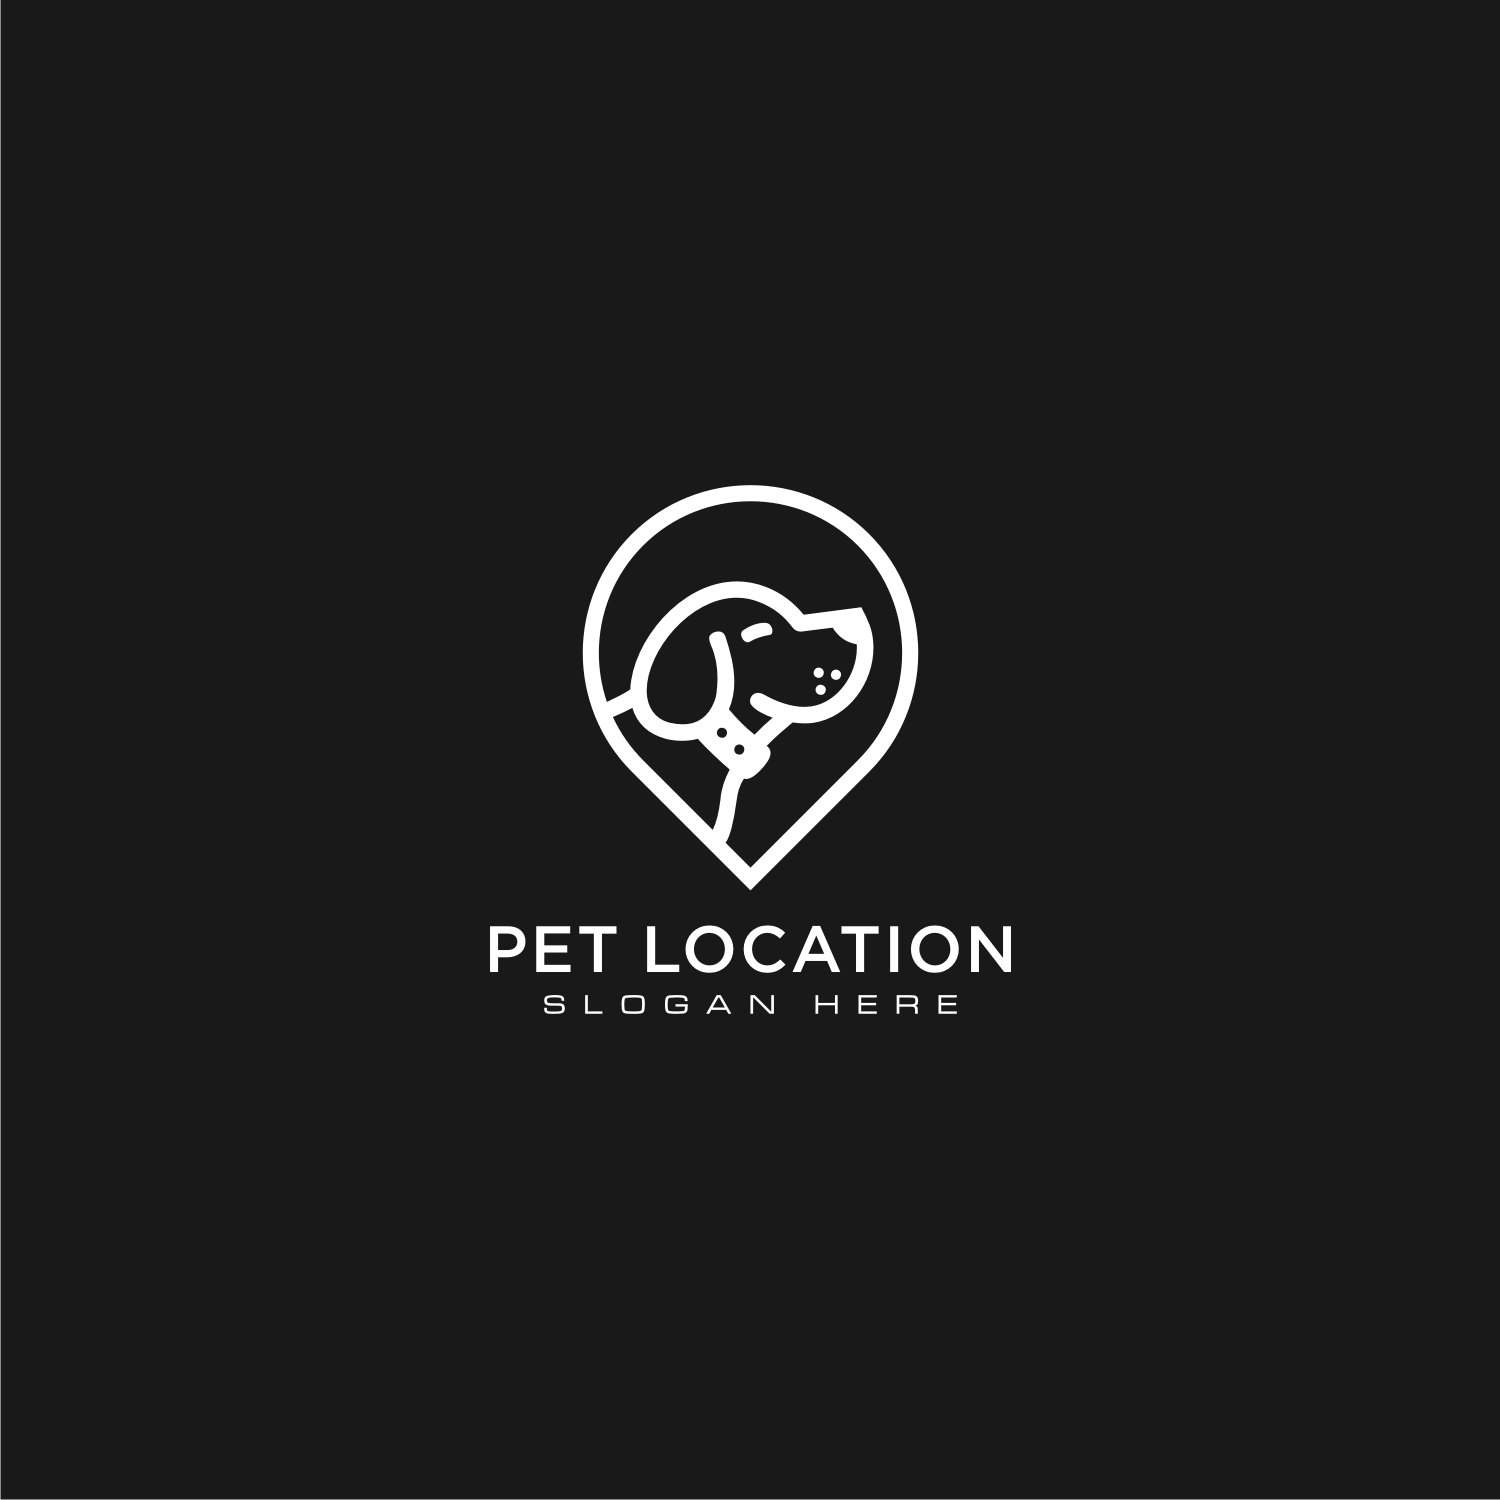 Dog Location Logo Vector Design Preview Image.